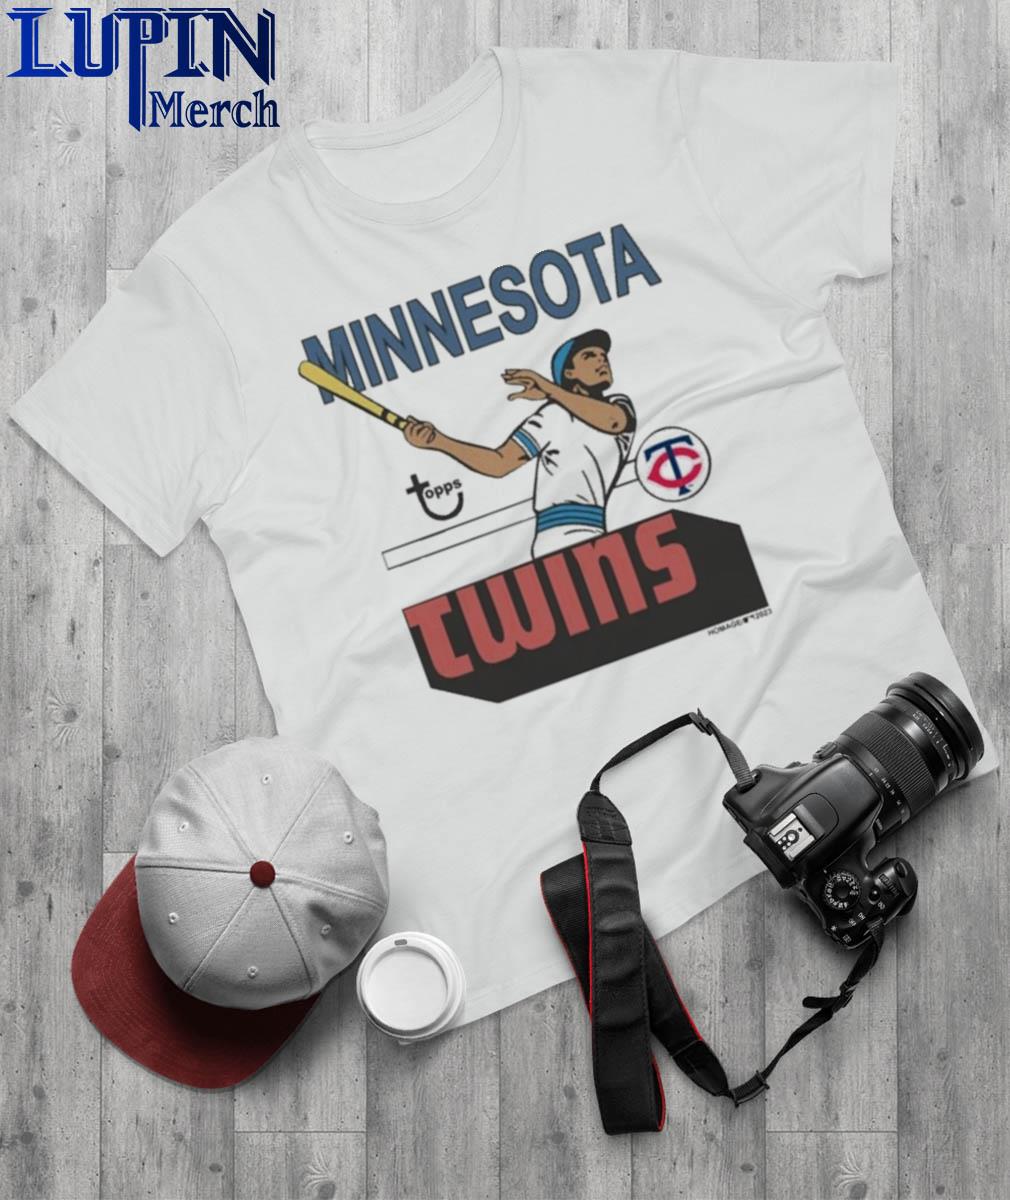 Official MLB x Topps Minnesota Twins shirt